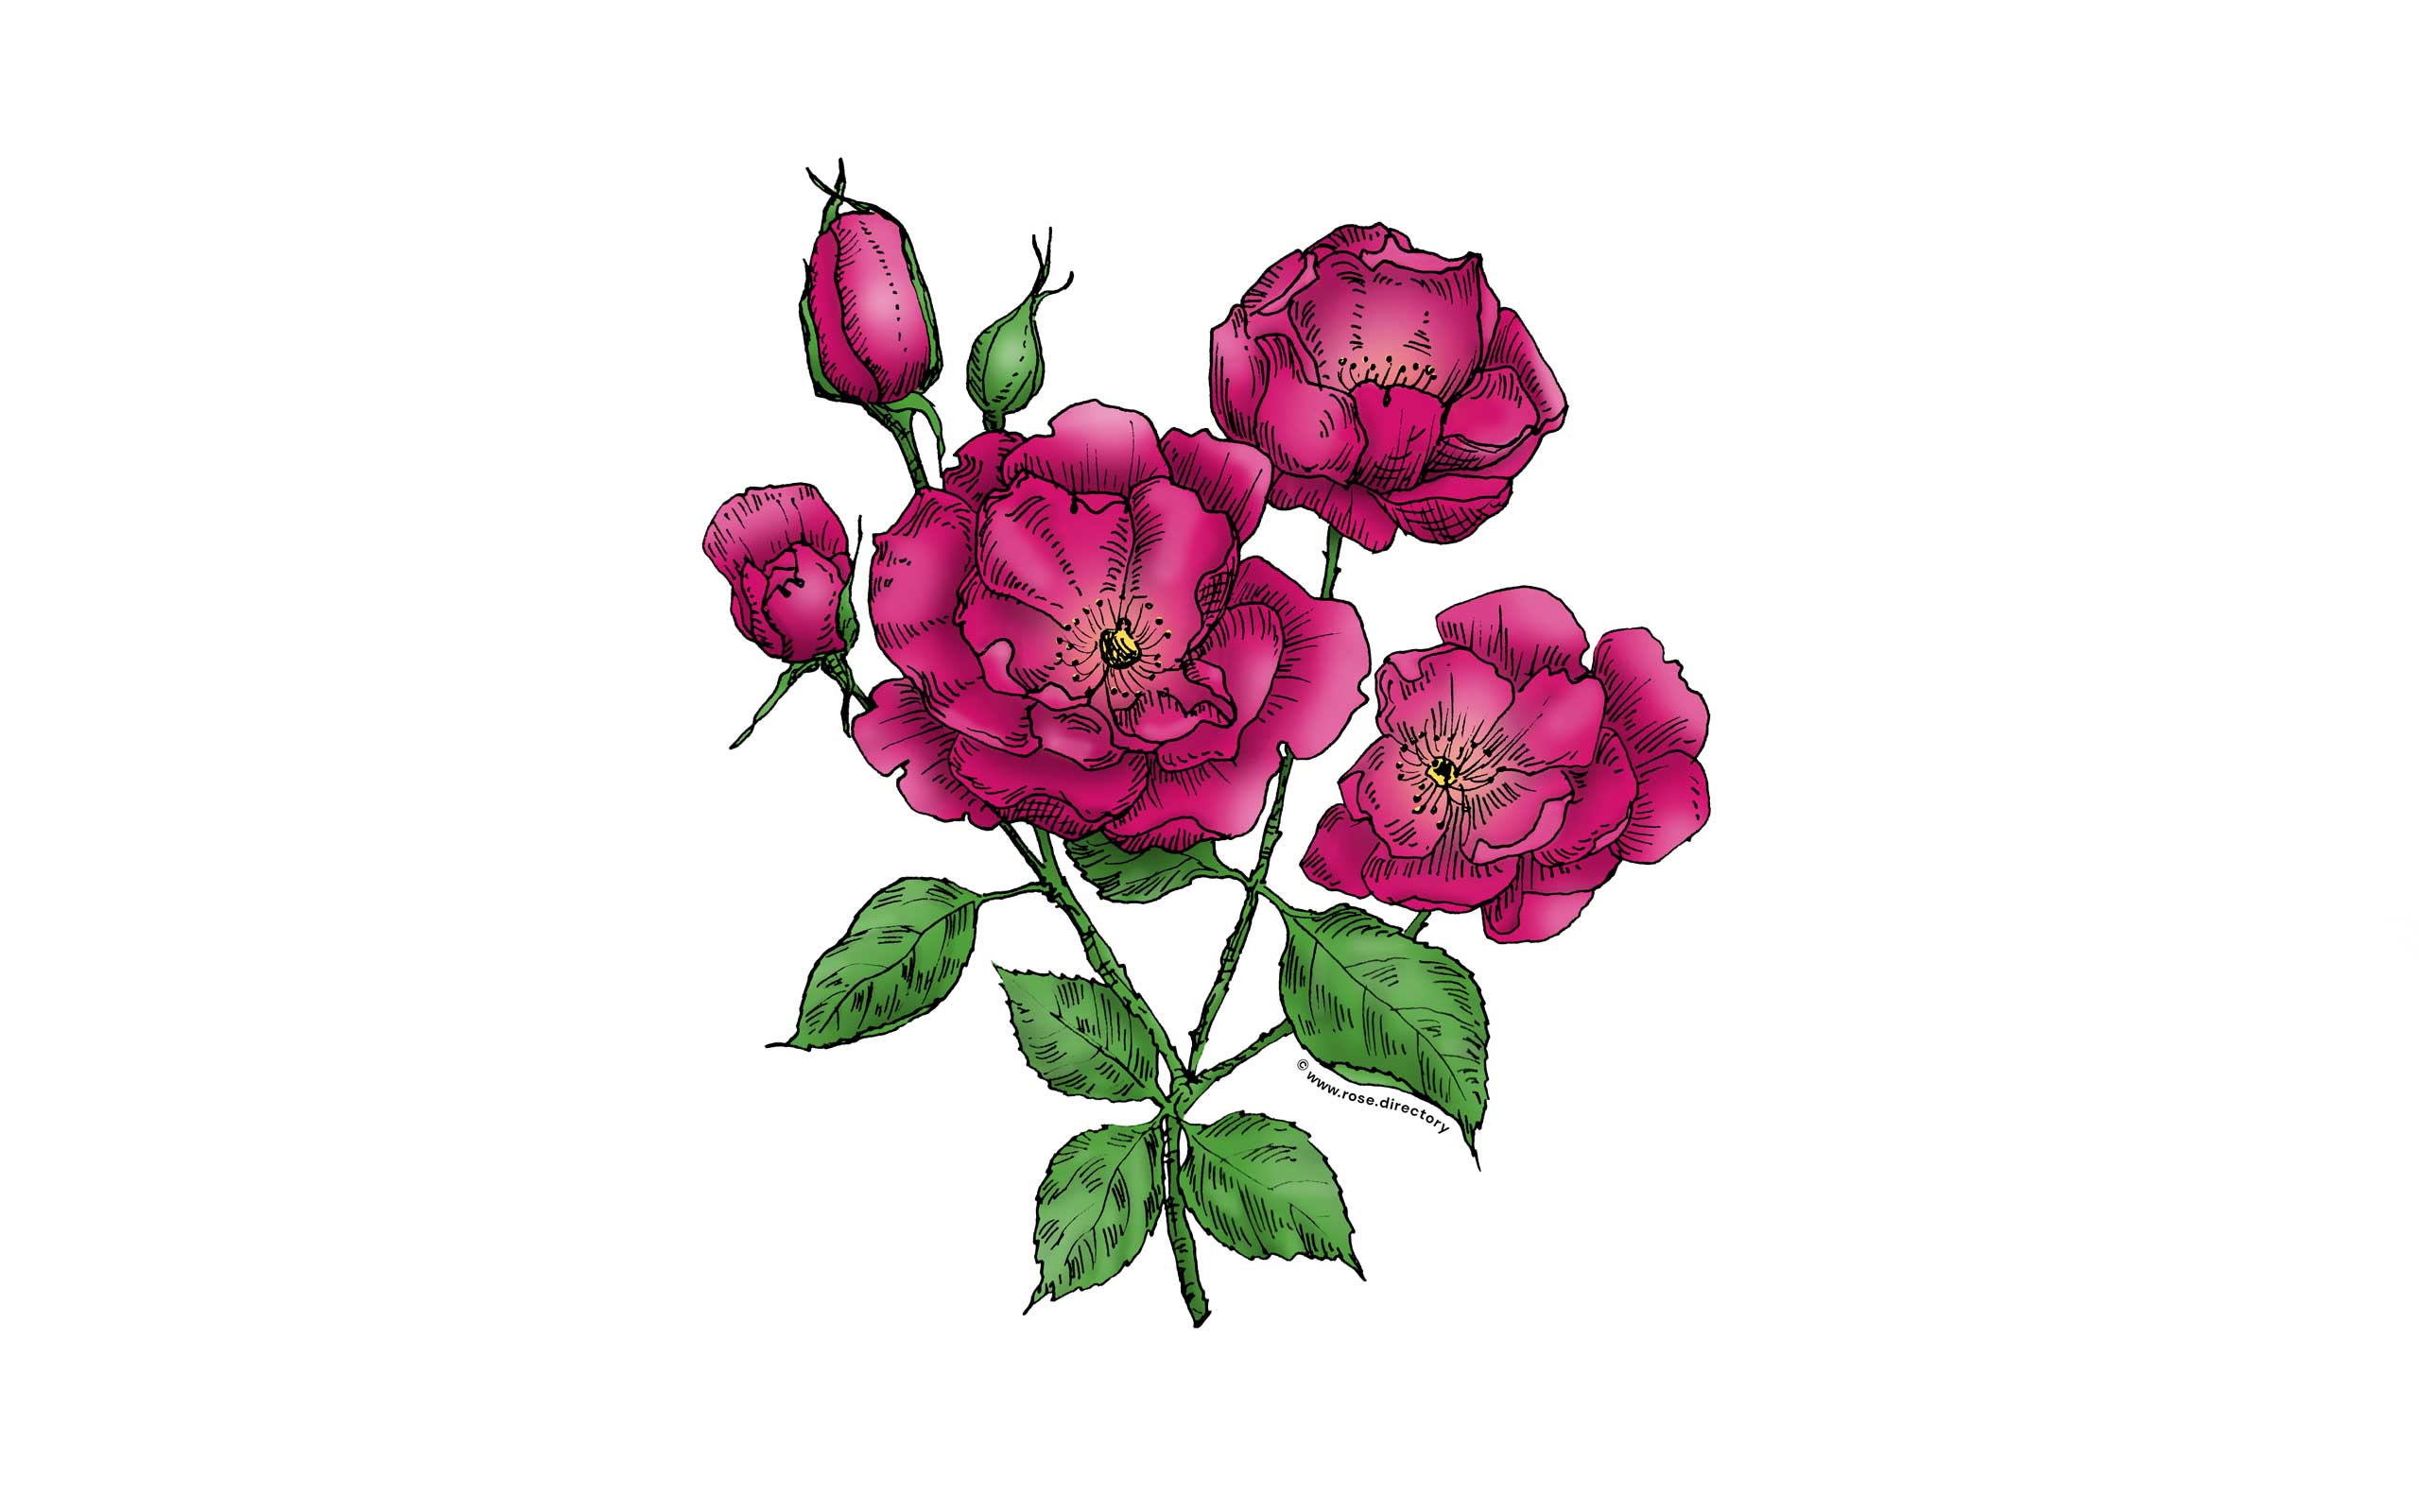 Deep Pink Flat Rose Bloom Semi-Double 8-15 Petals In 2 Rows